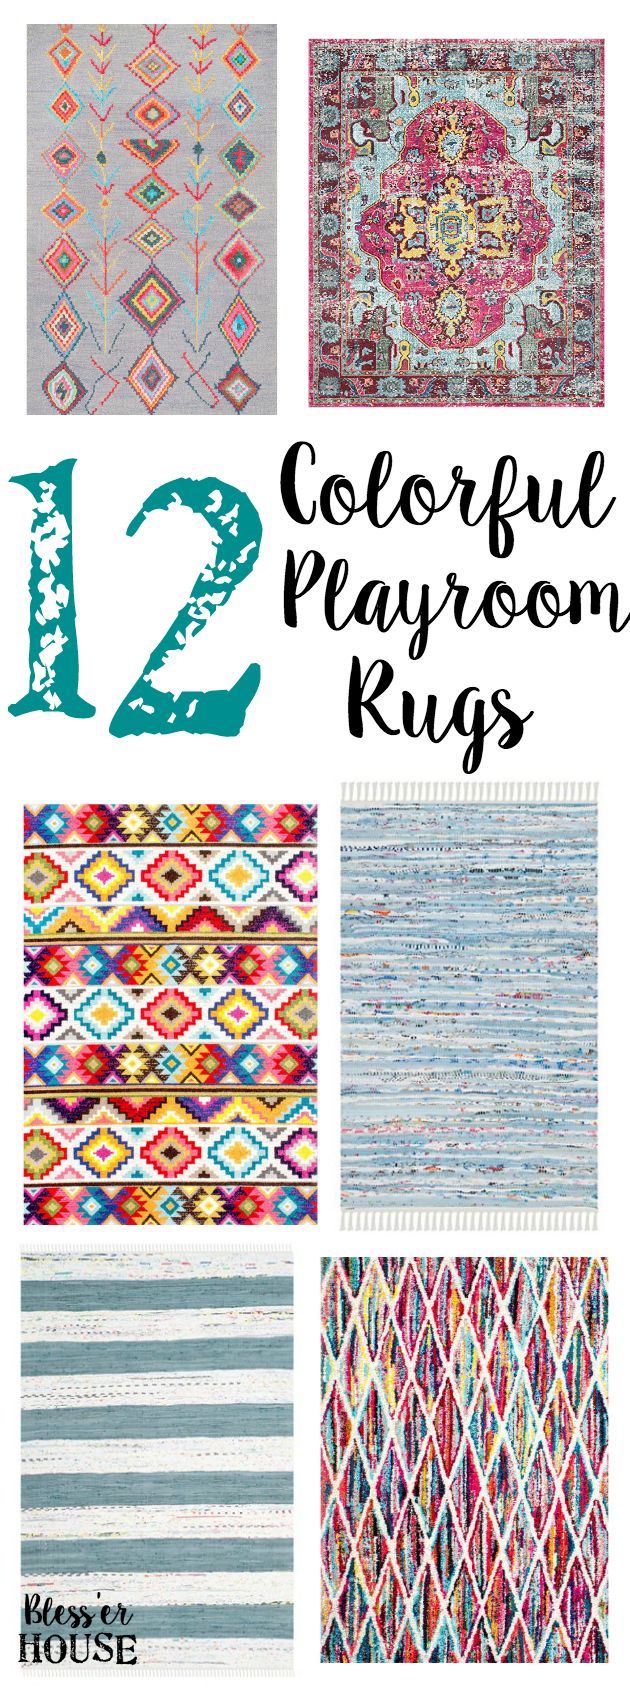 Colorful Playroom Rugs